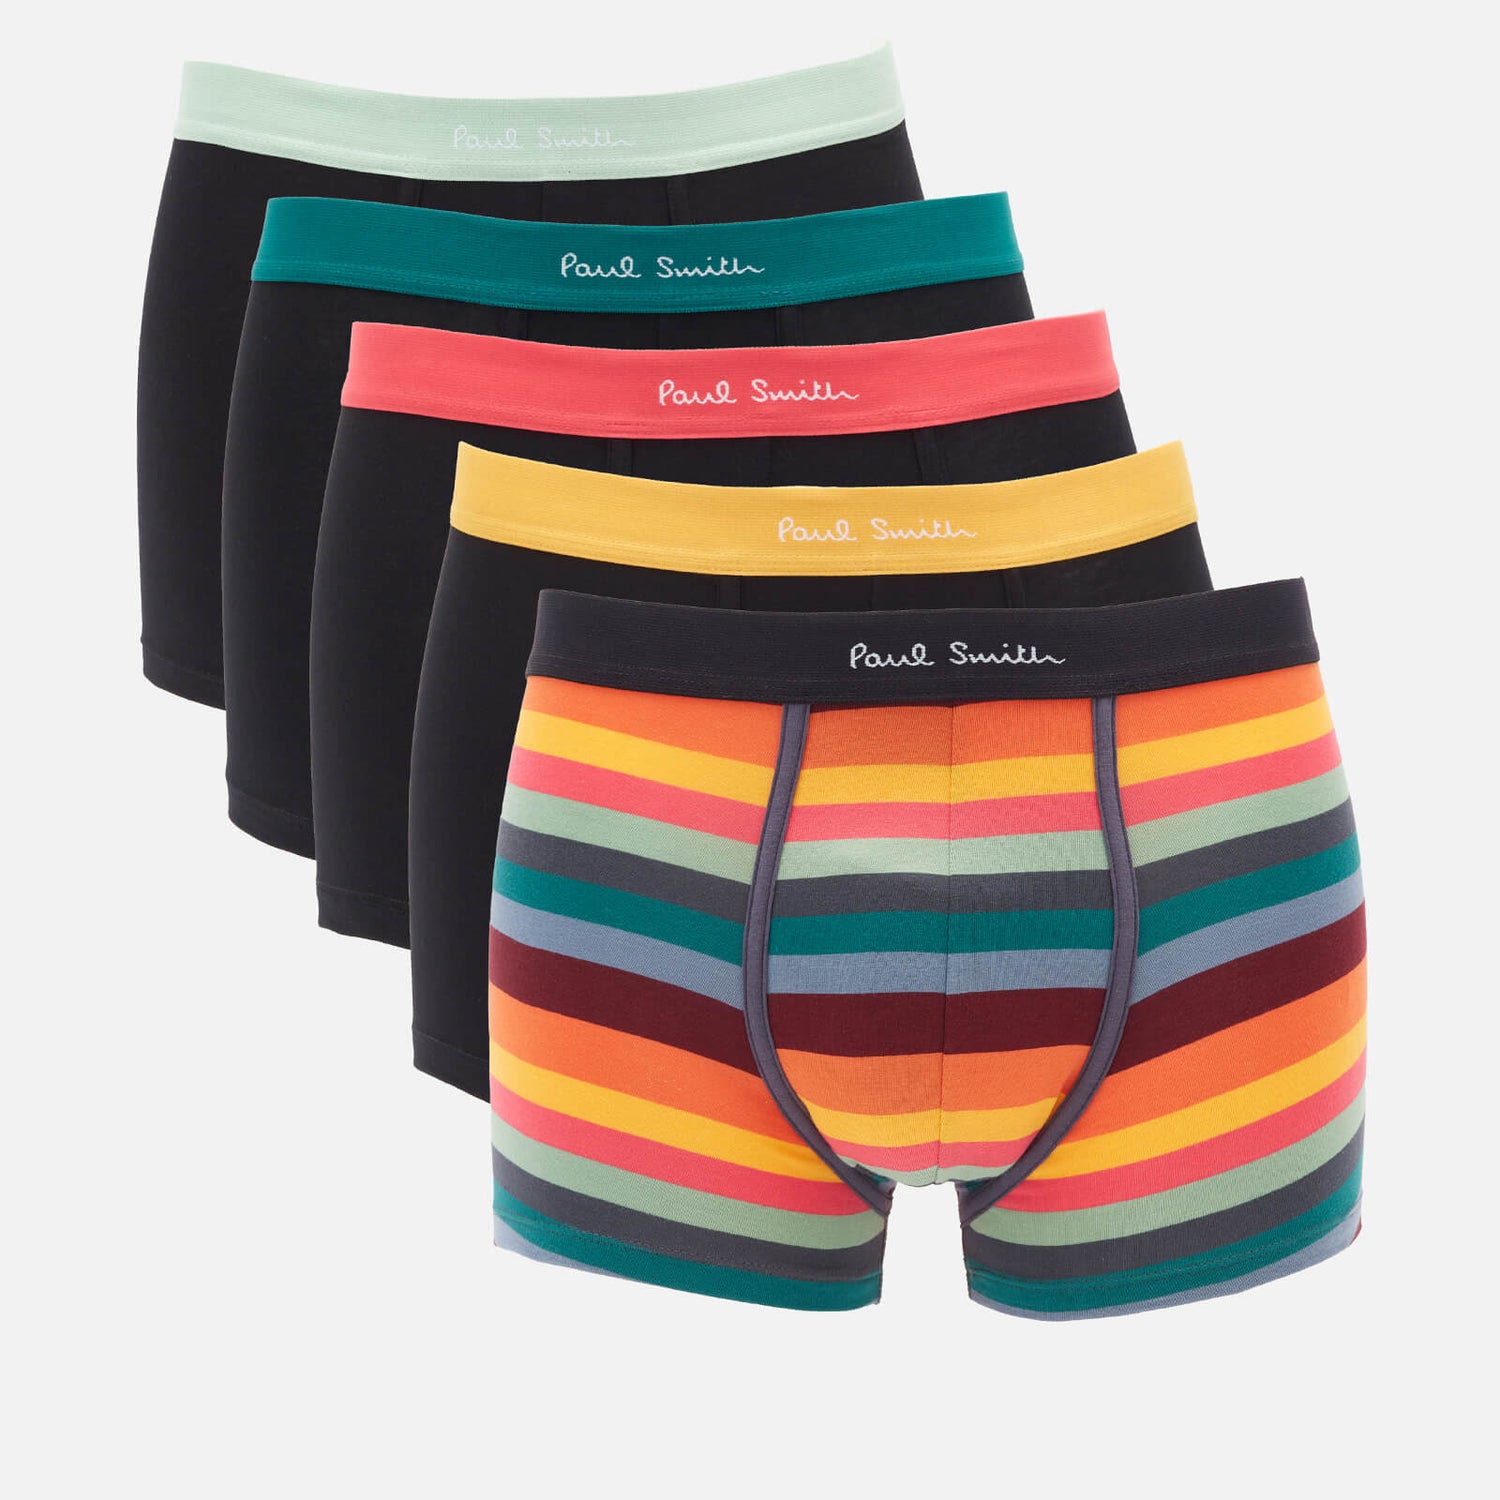 PS Paul Smith Men's 5-Pack Trunk Boxer Shorts - Black/Stripe - S